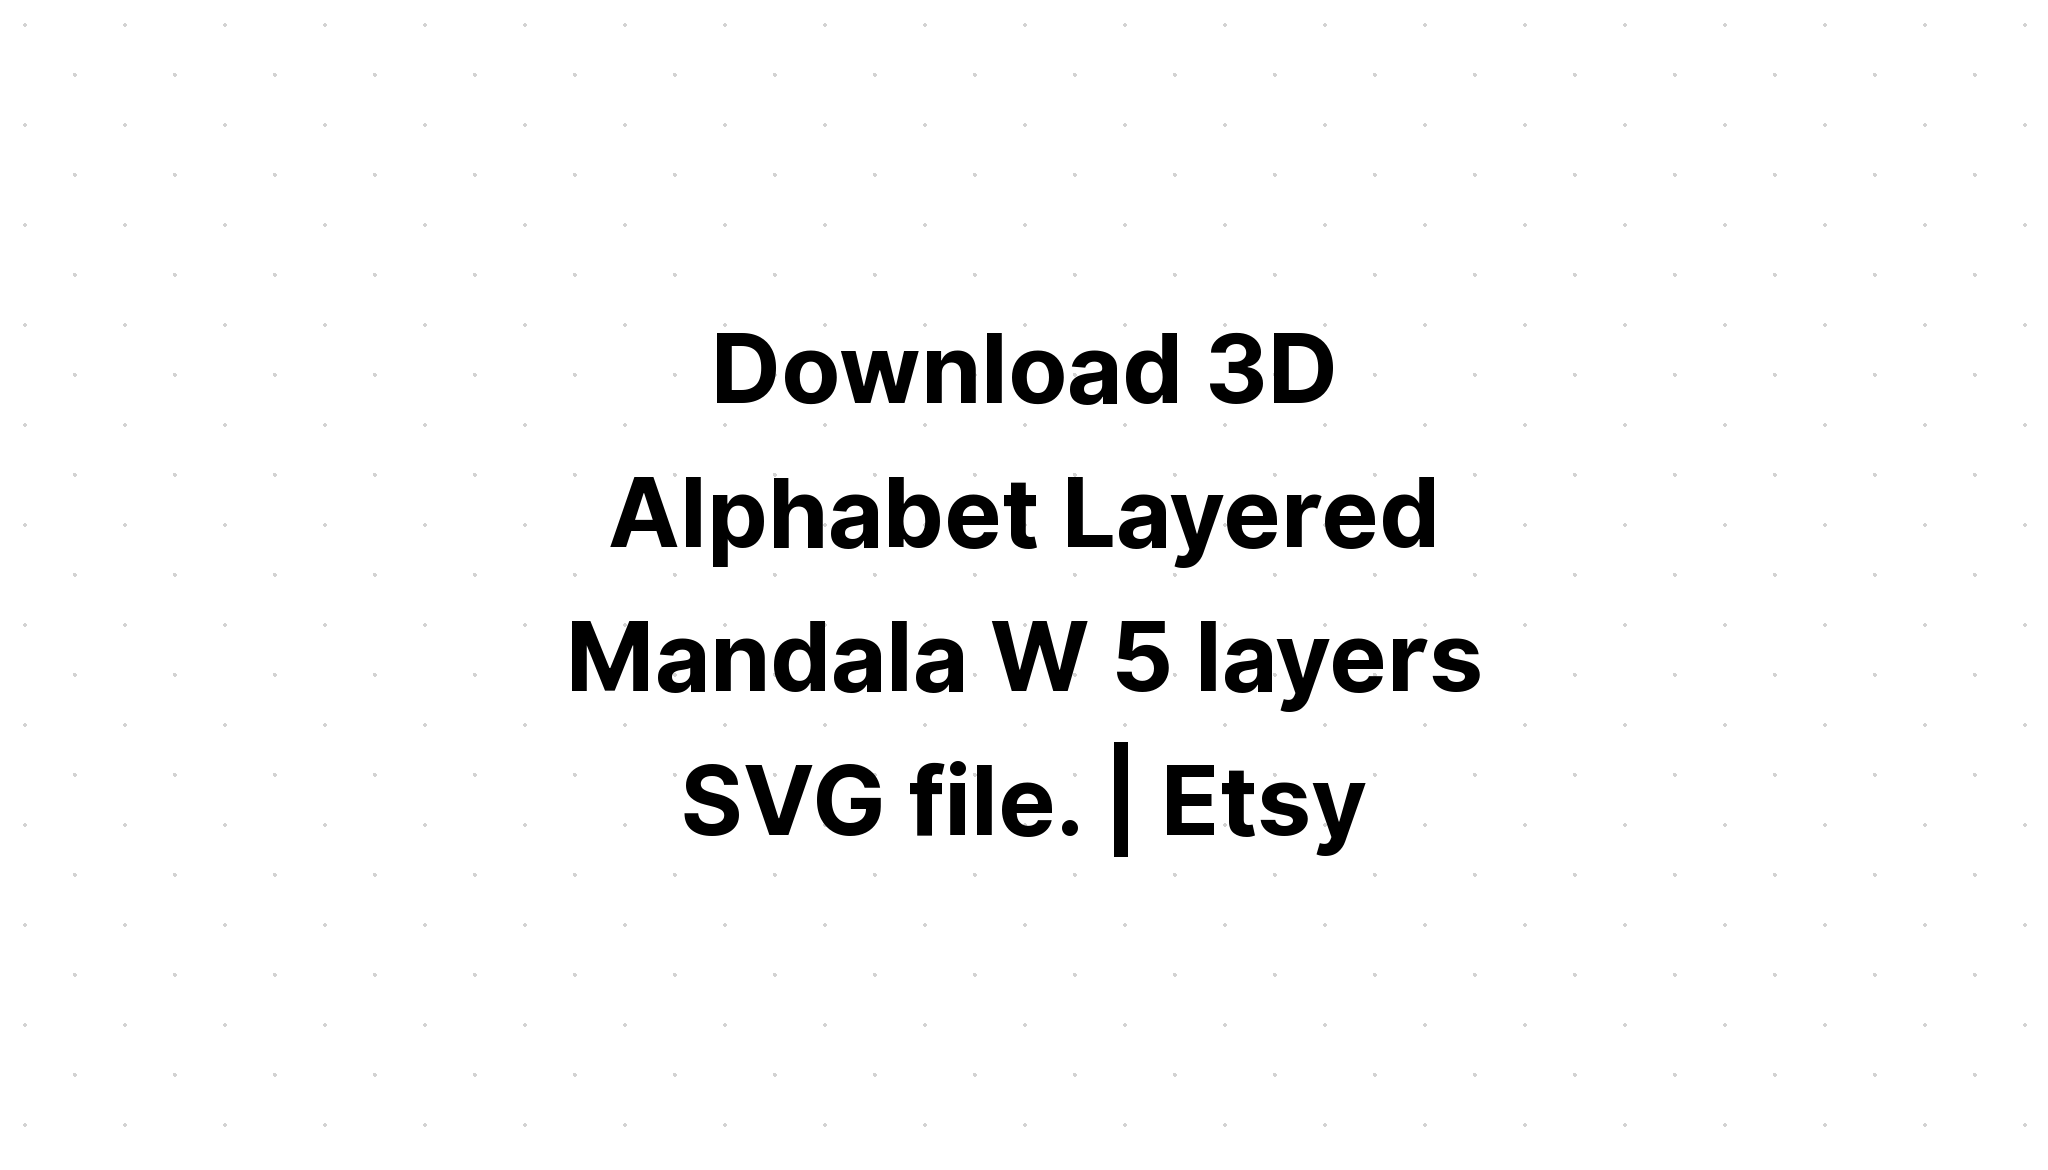 Download Hedgehog Mandala Layered Svg Free - Free Layered SVG Files